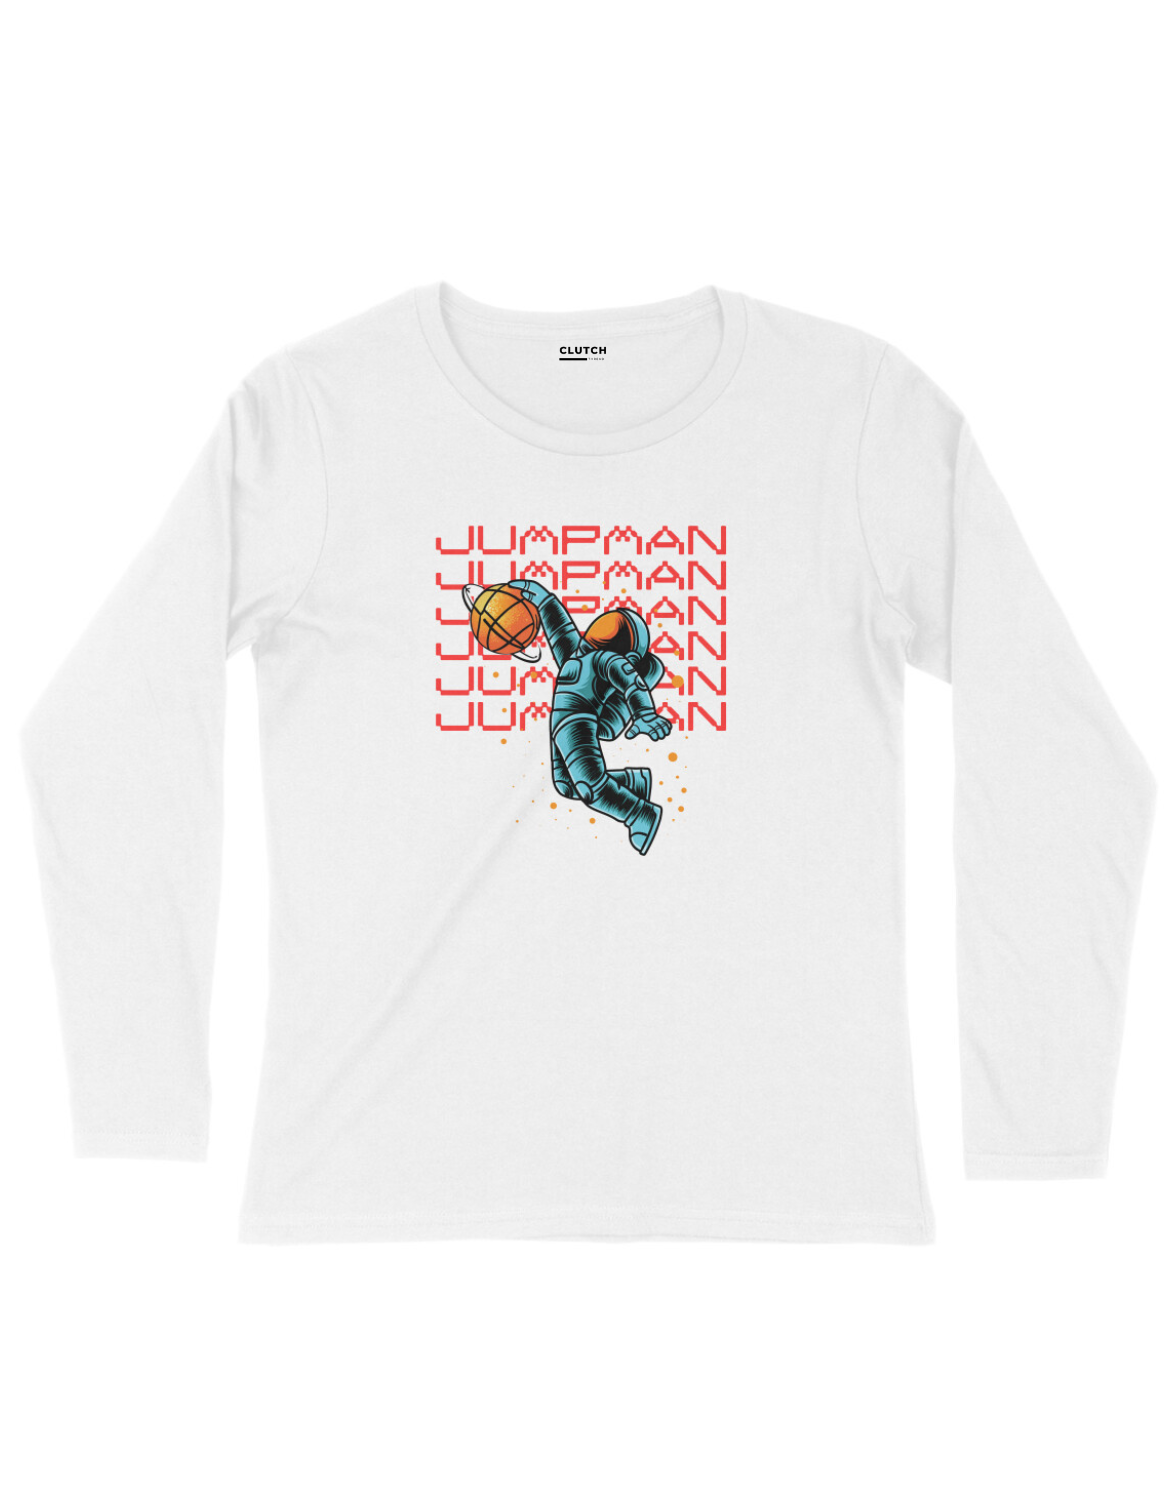 Jumpman in Space- Full Sleeve T-Shirt